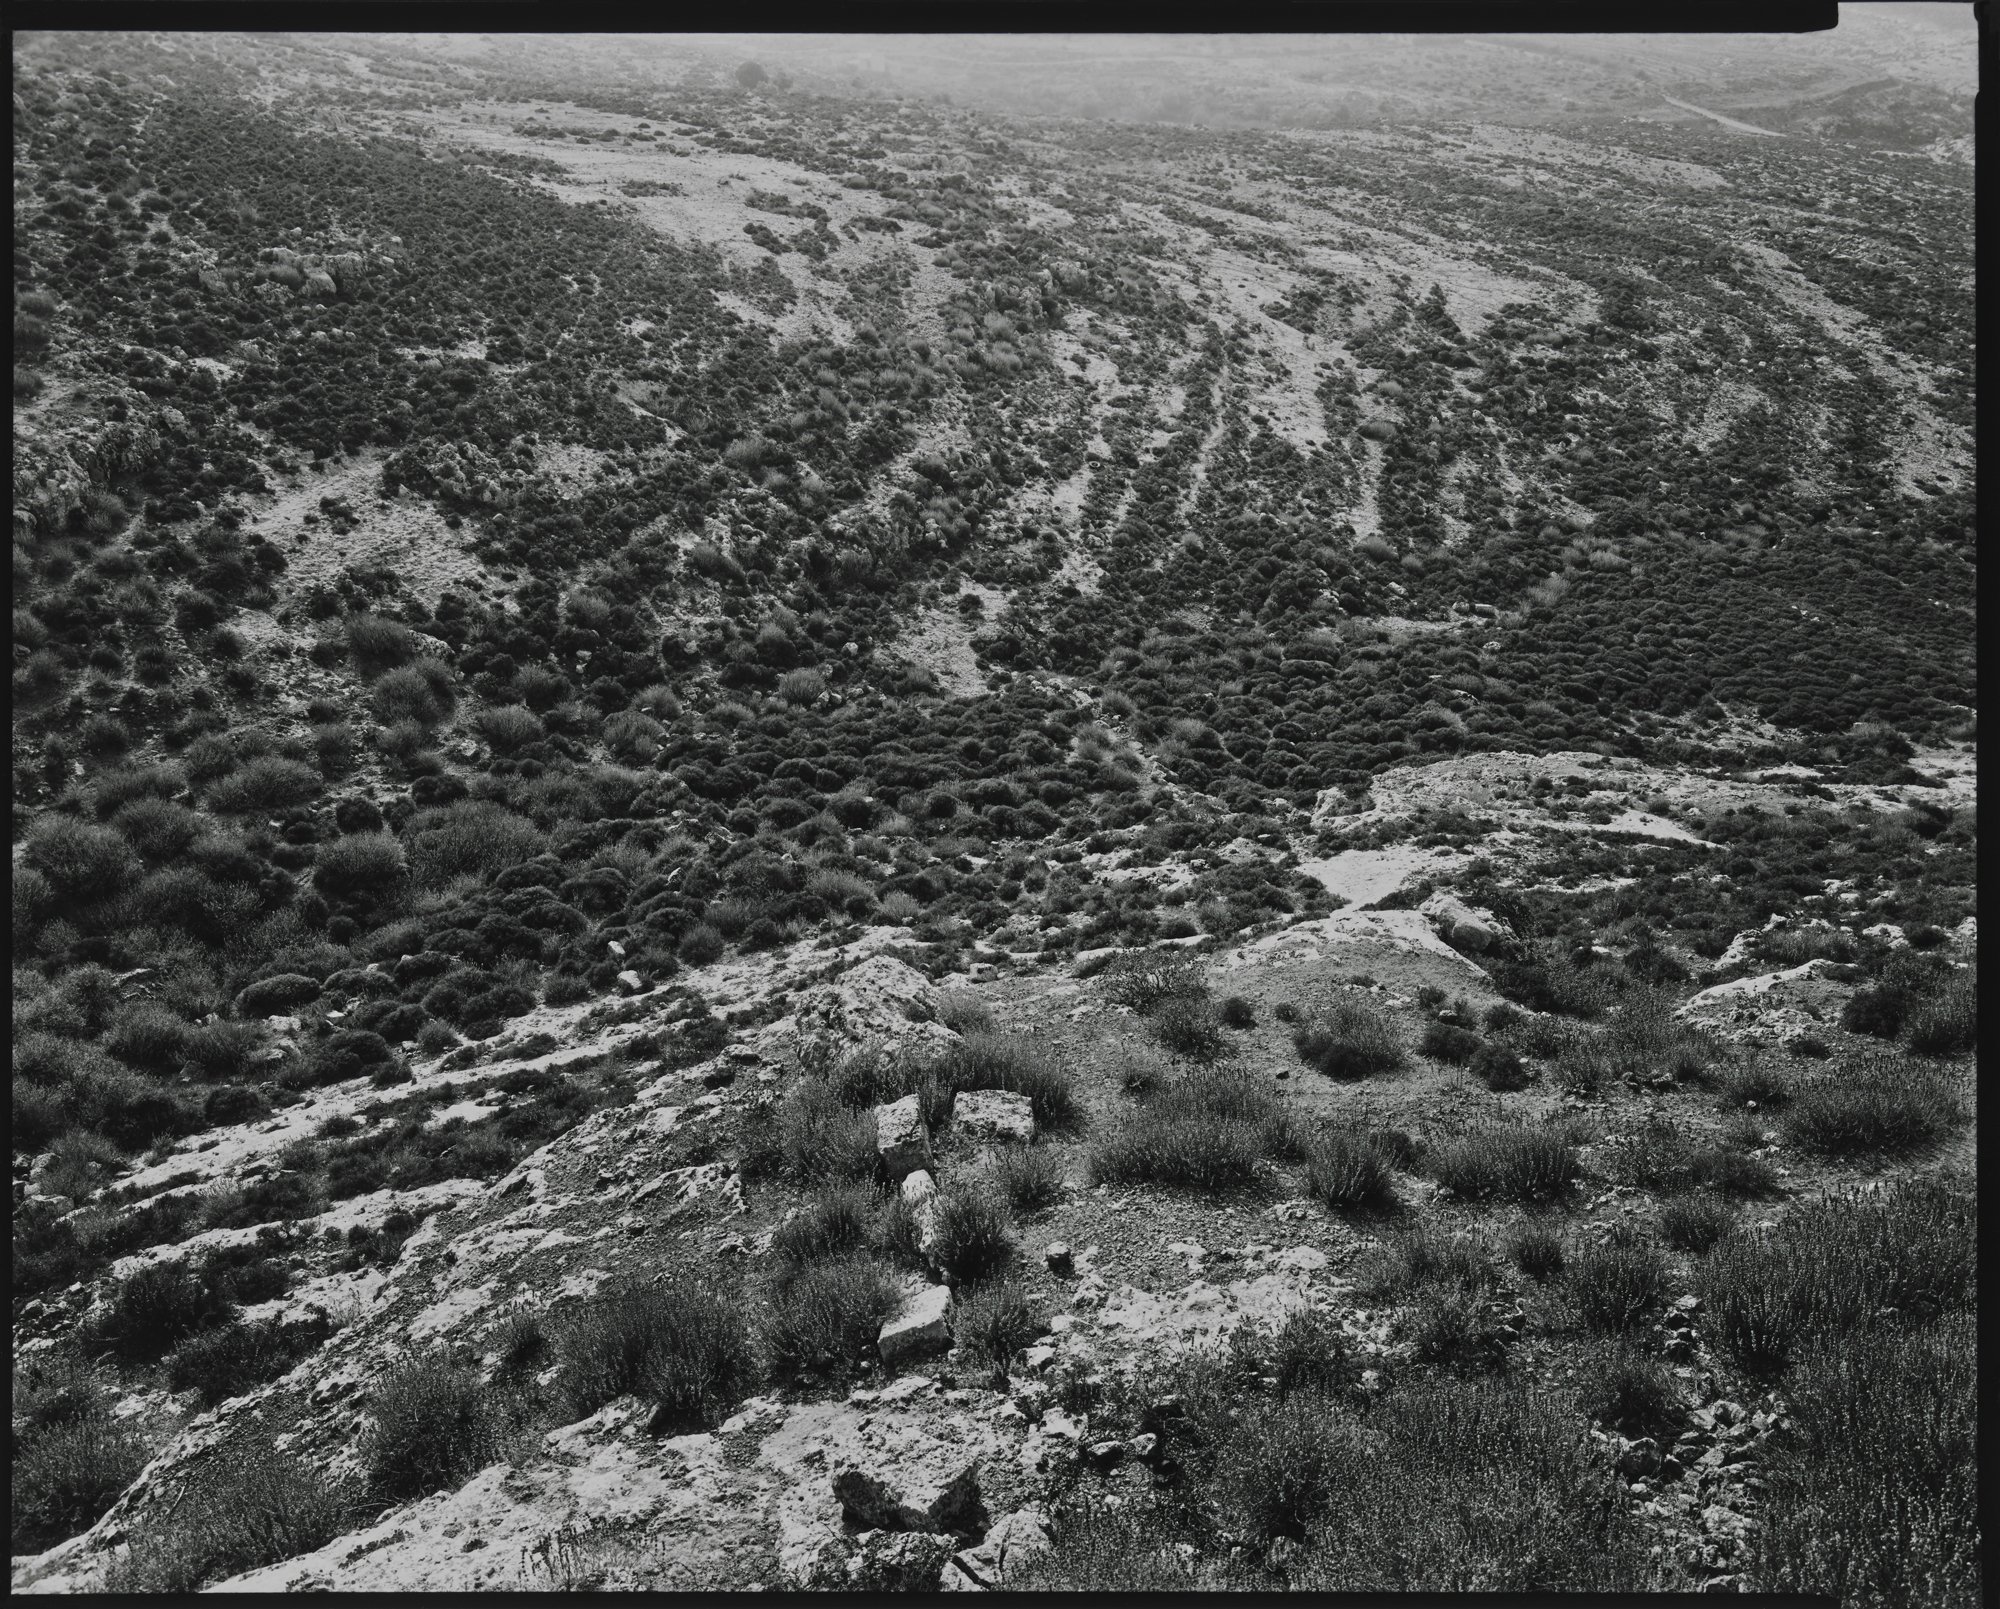 Cyrenaican Landscapes_Cyrene Landscape-Cut Rocks, Shahat, Libya_1979 © Nick Merrick.jpg